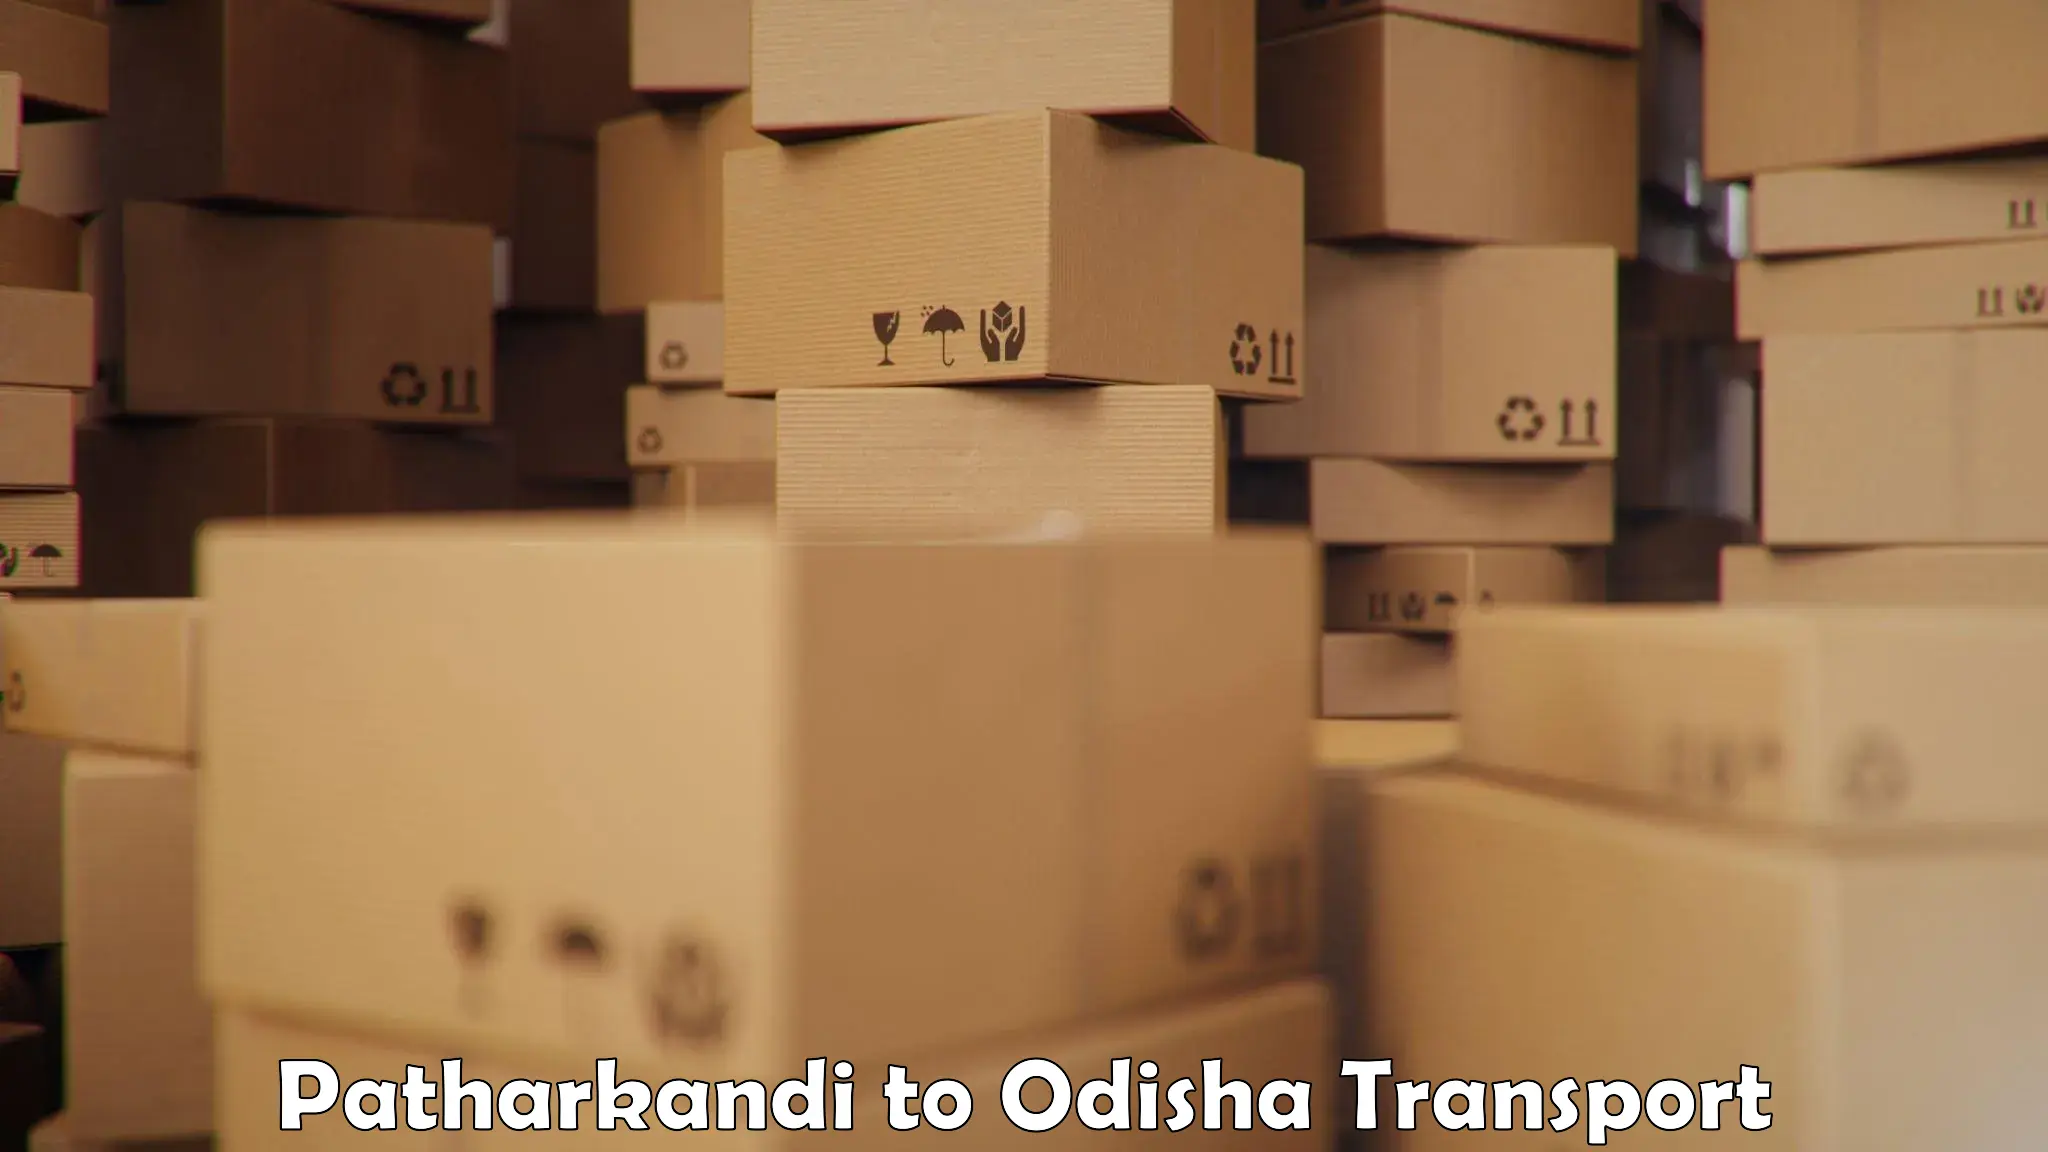 Truck transport companies in India Patharkandi to Galleri